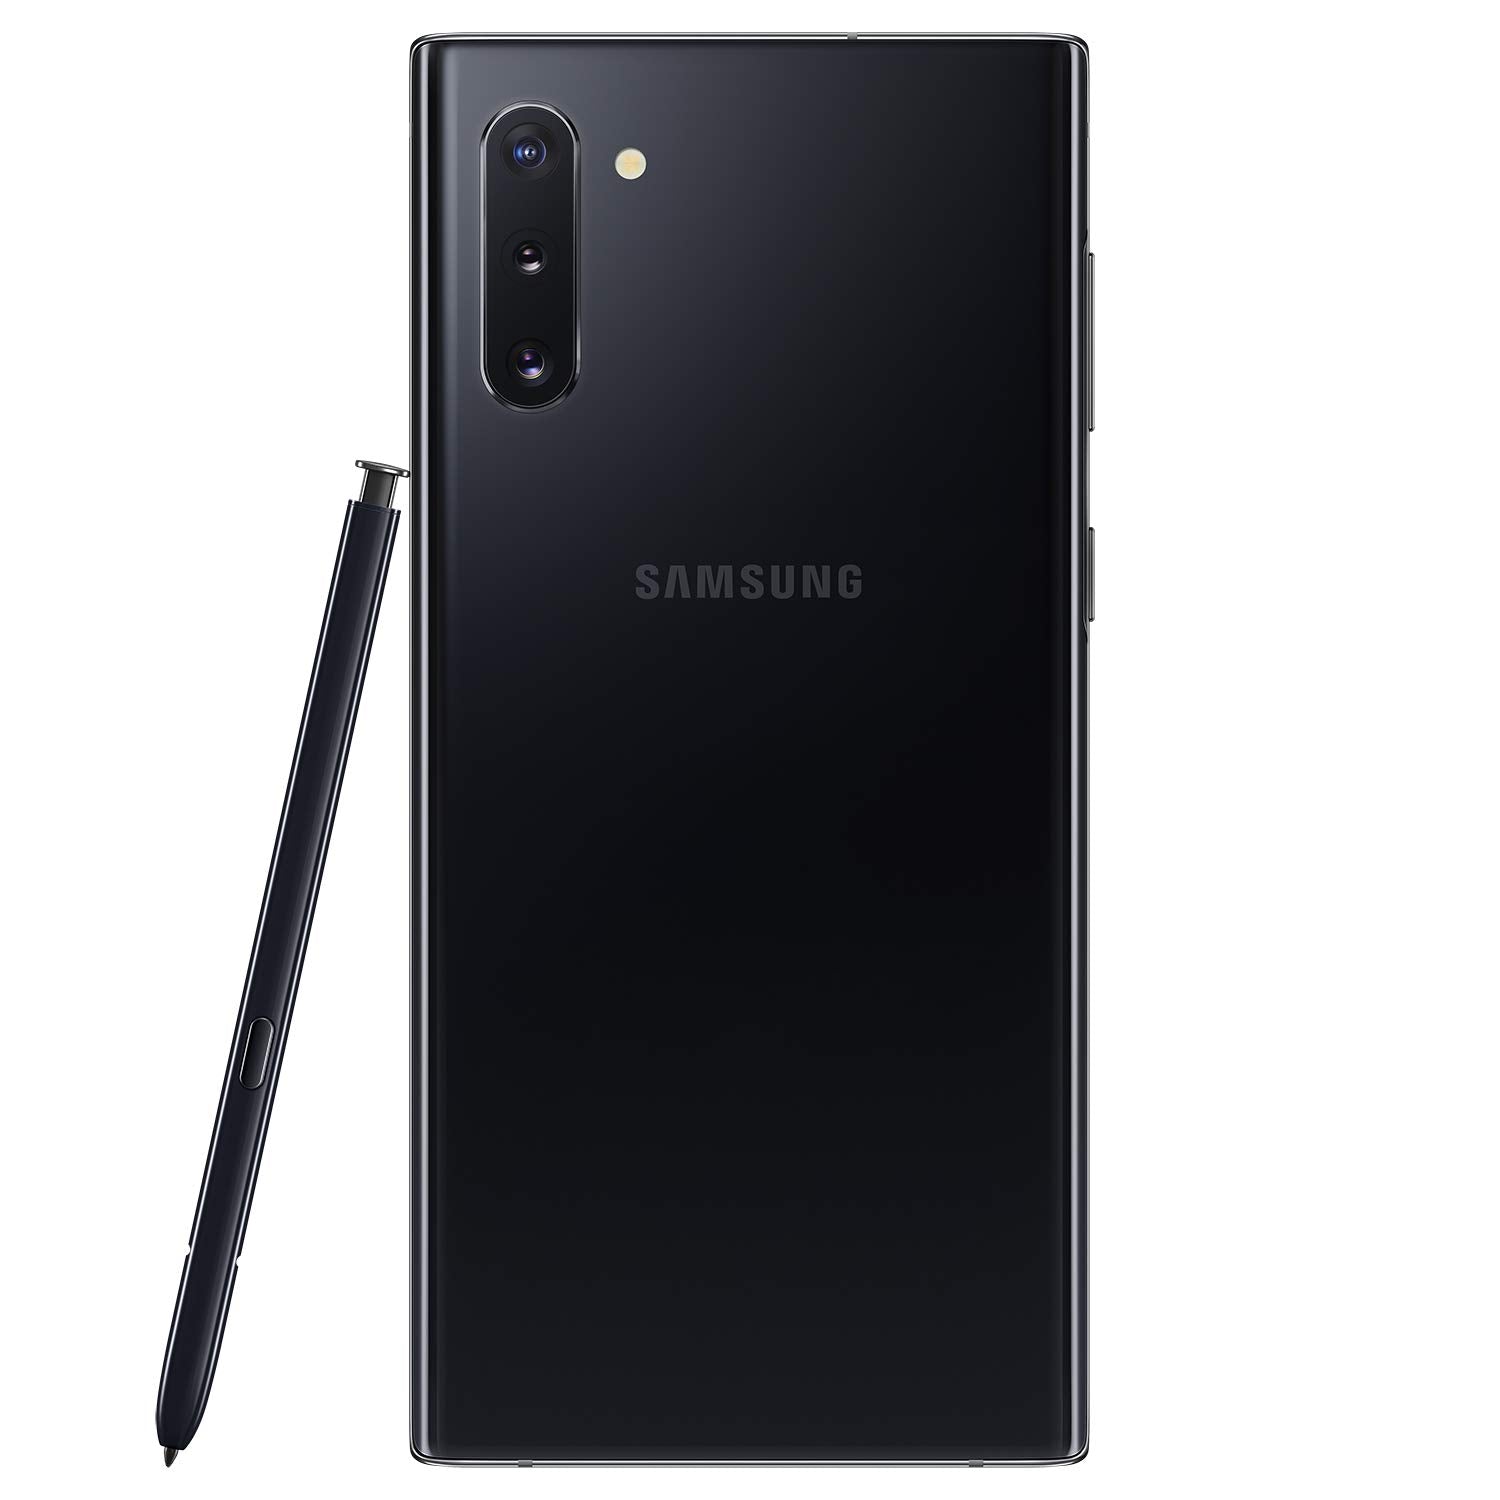 Samsung Galaxy Note 10+ Plus 256GB Unlocked